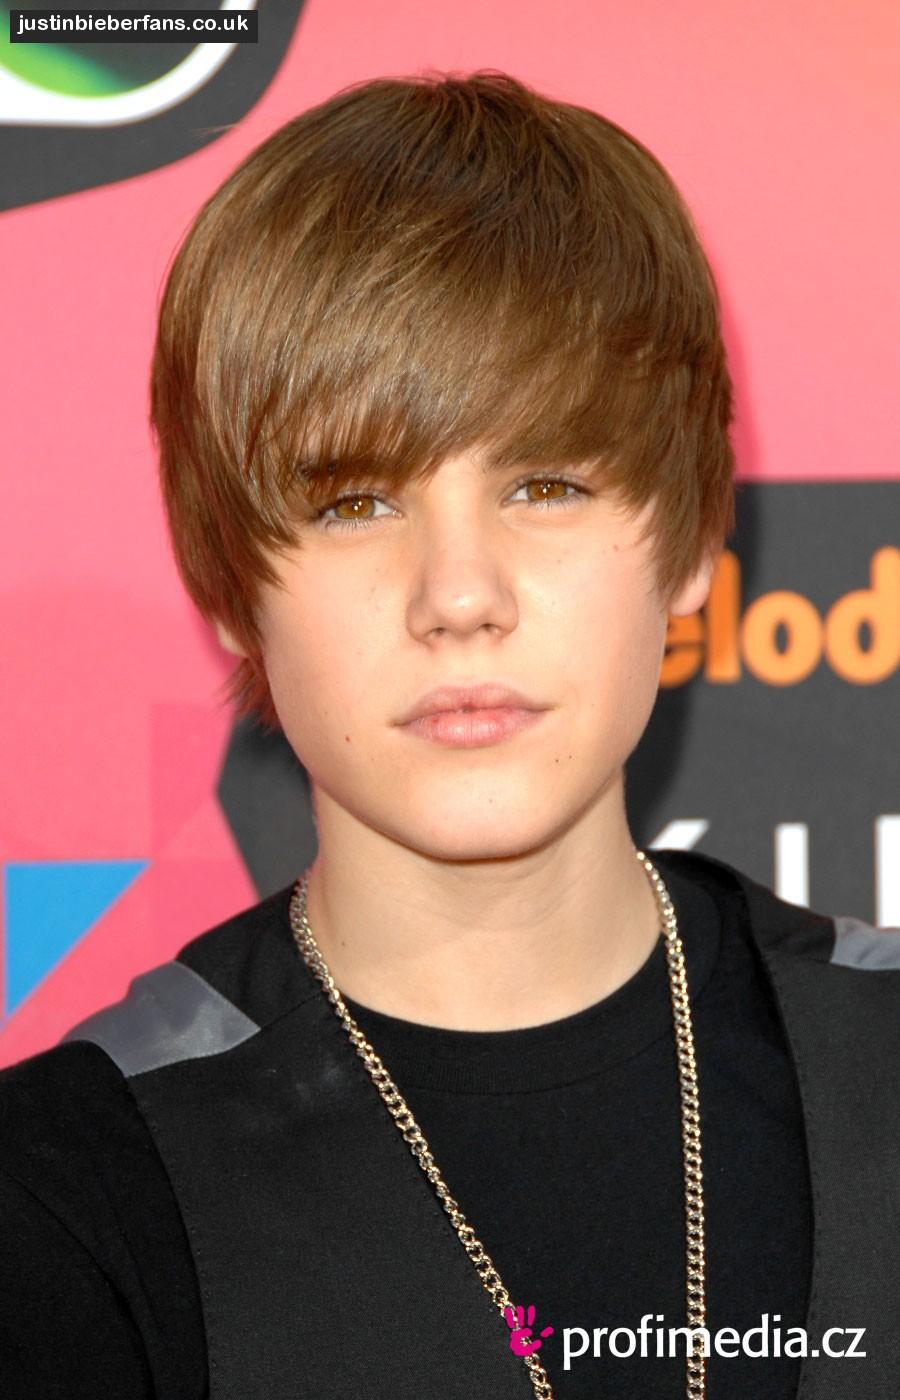 Justin Bieber Hairstyle Large Image